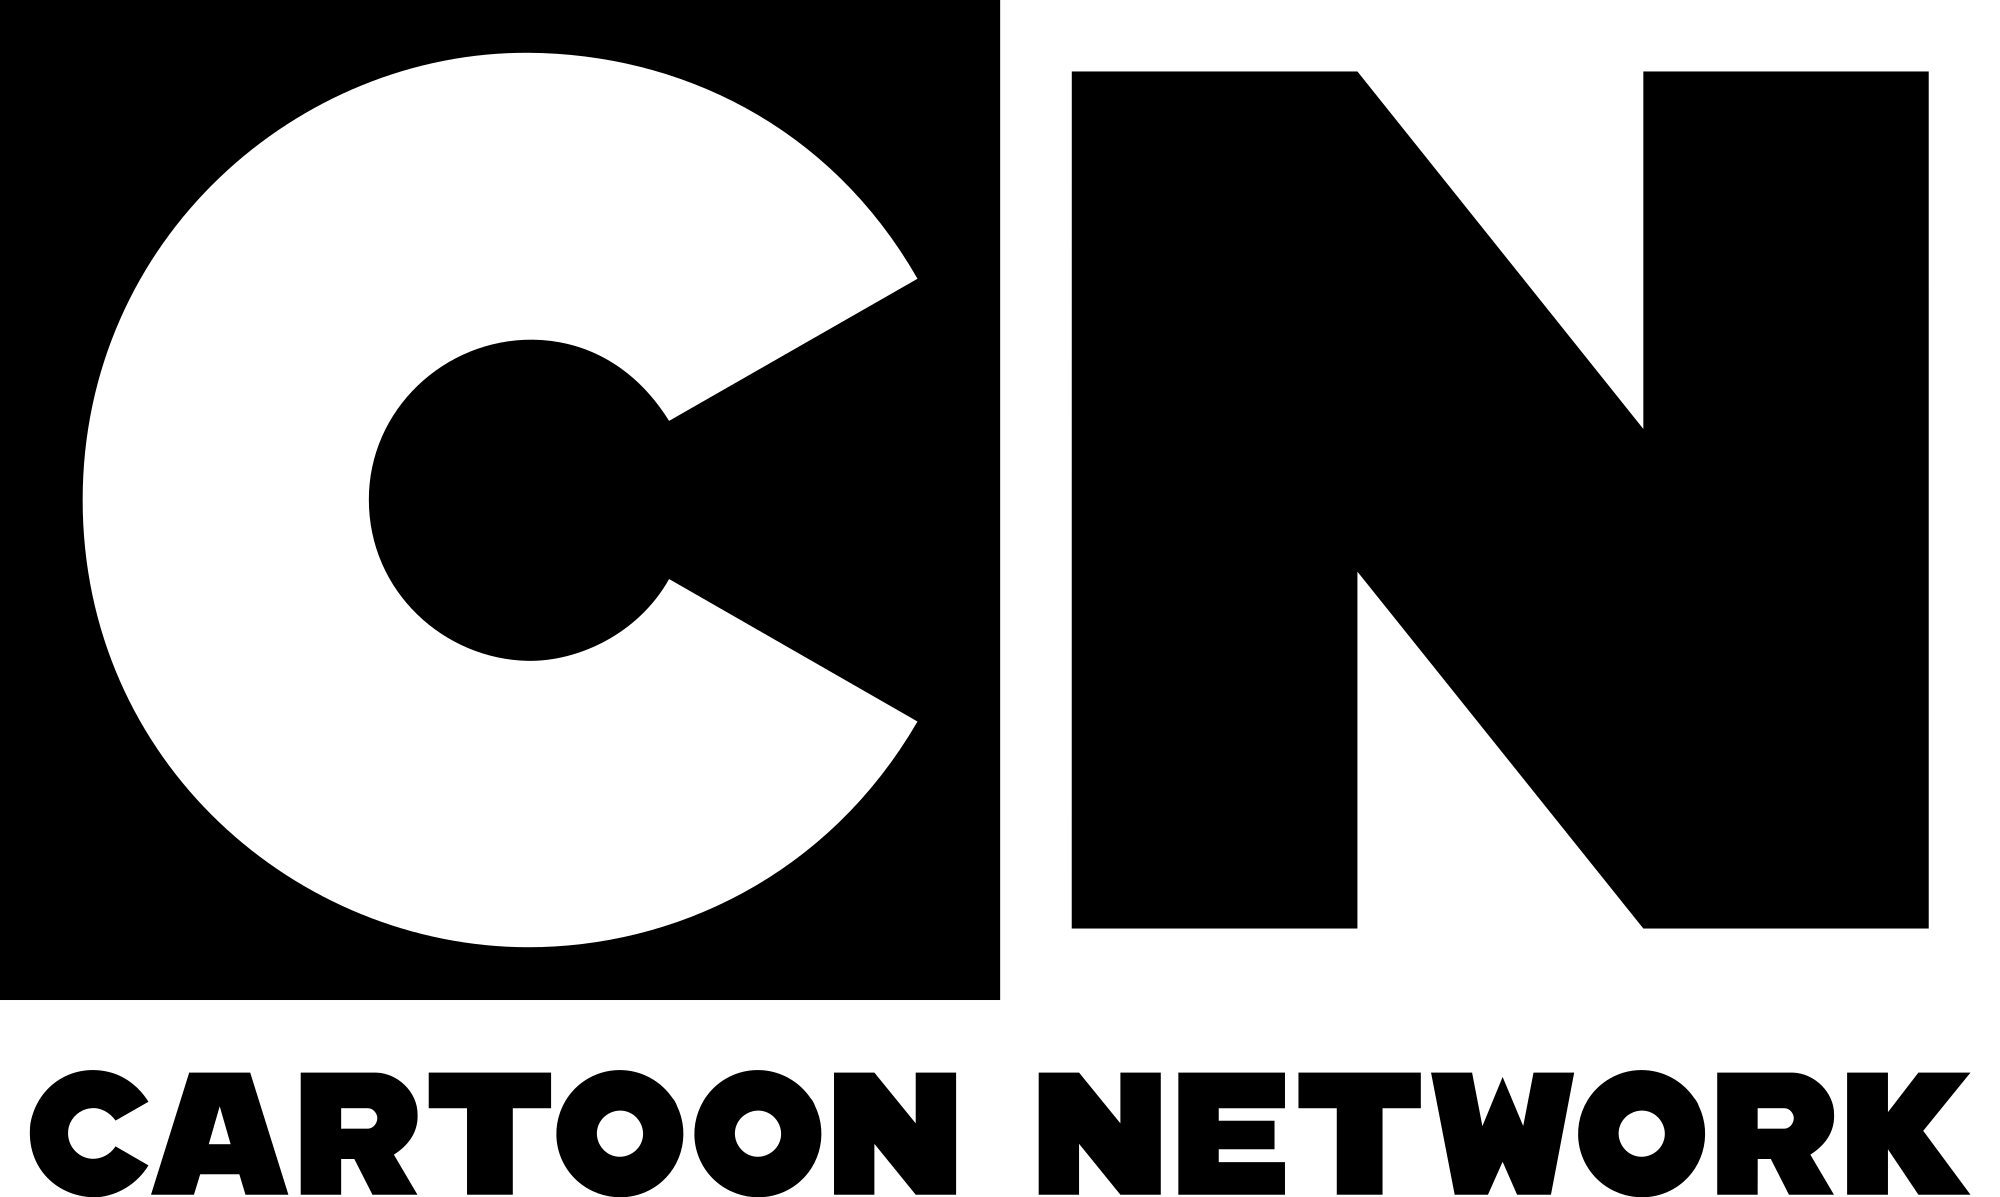 Cartoon Network - Wikipedia